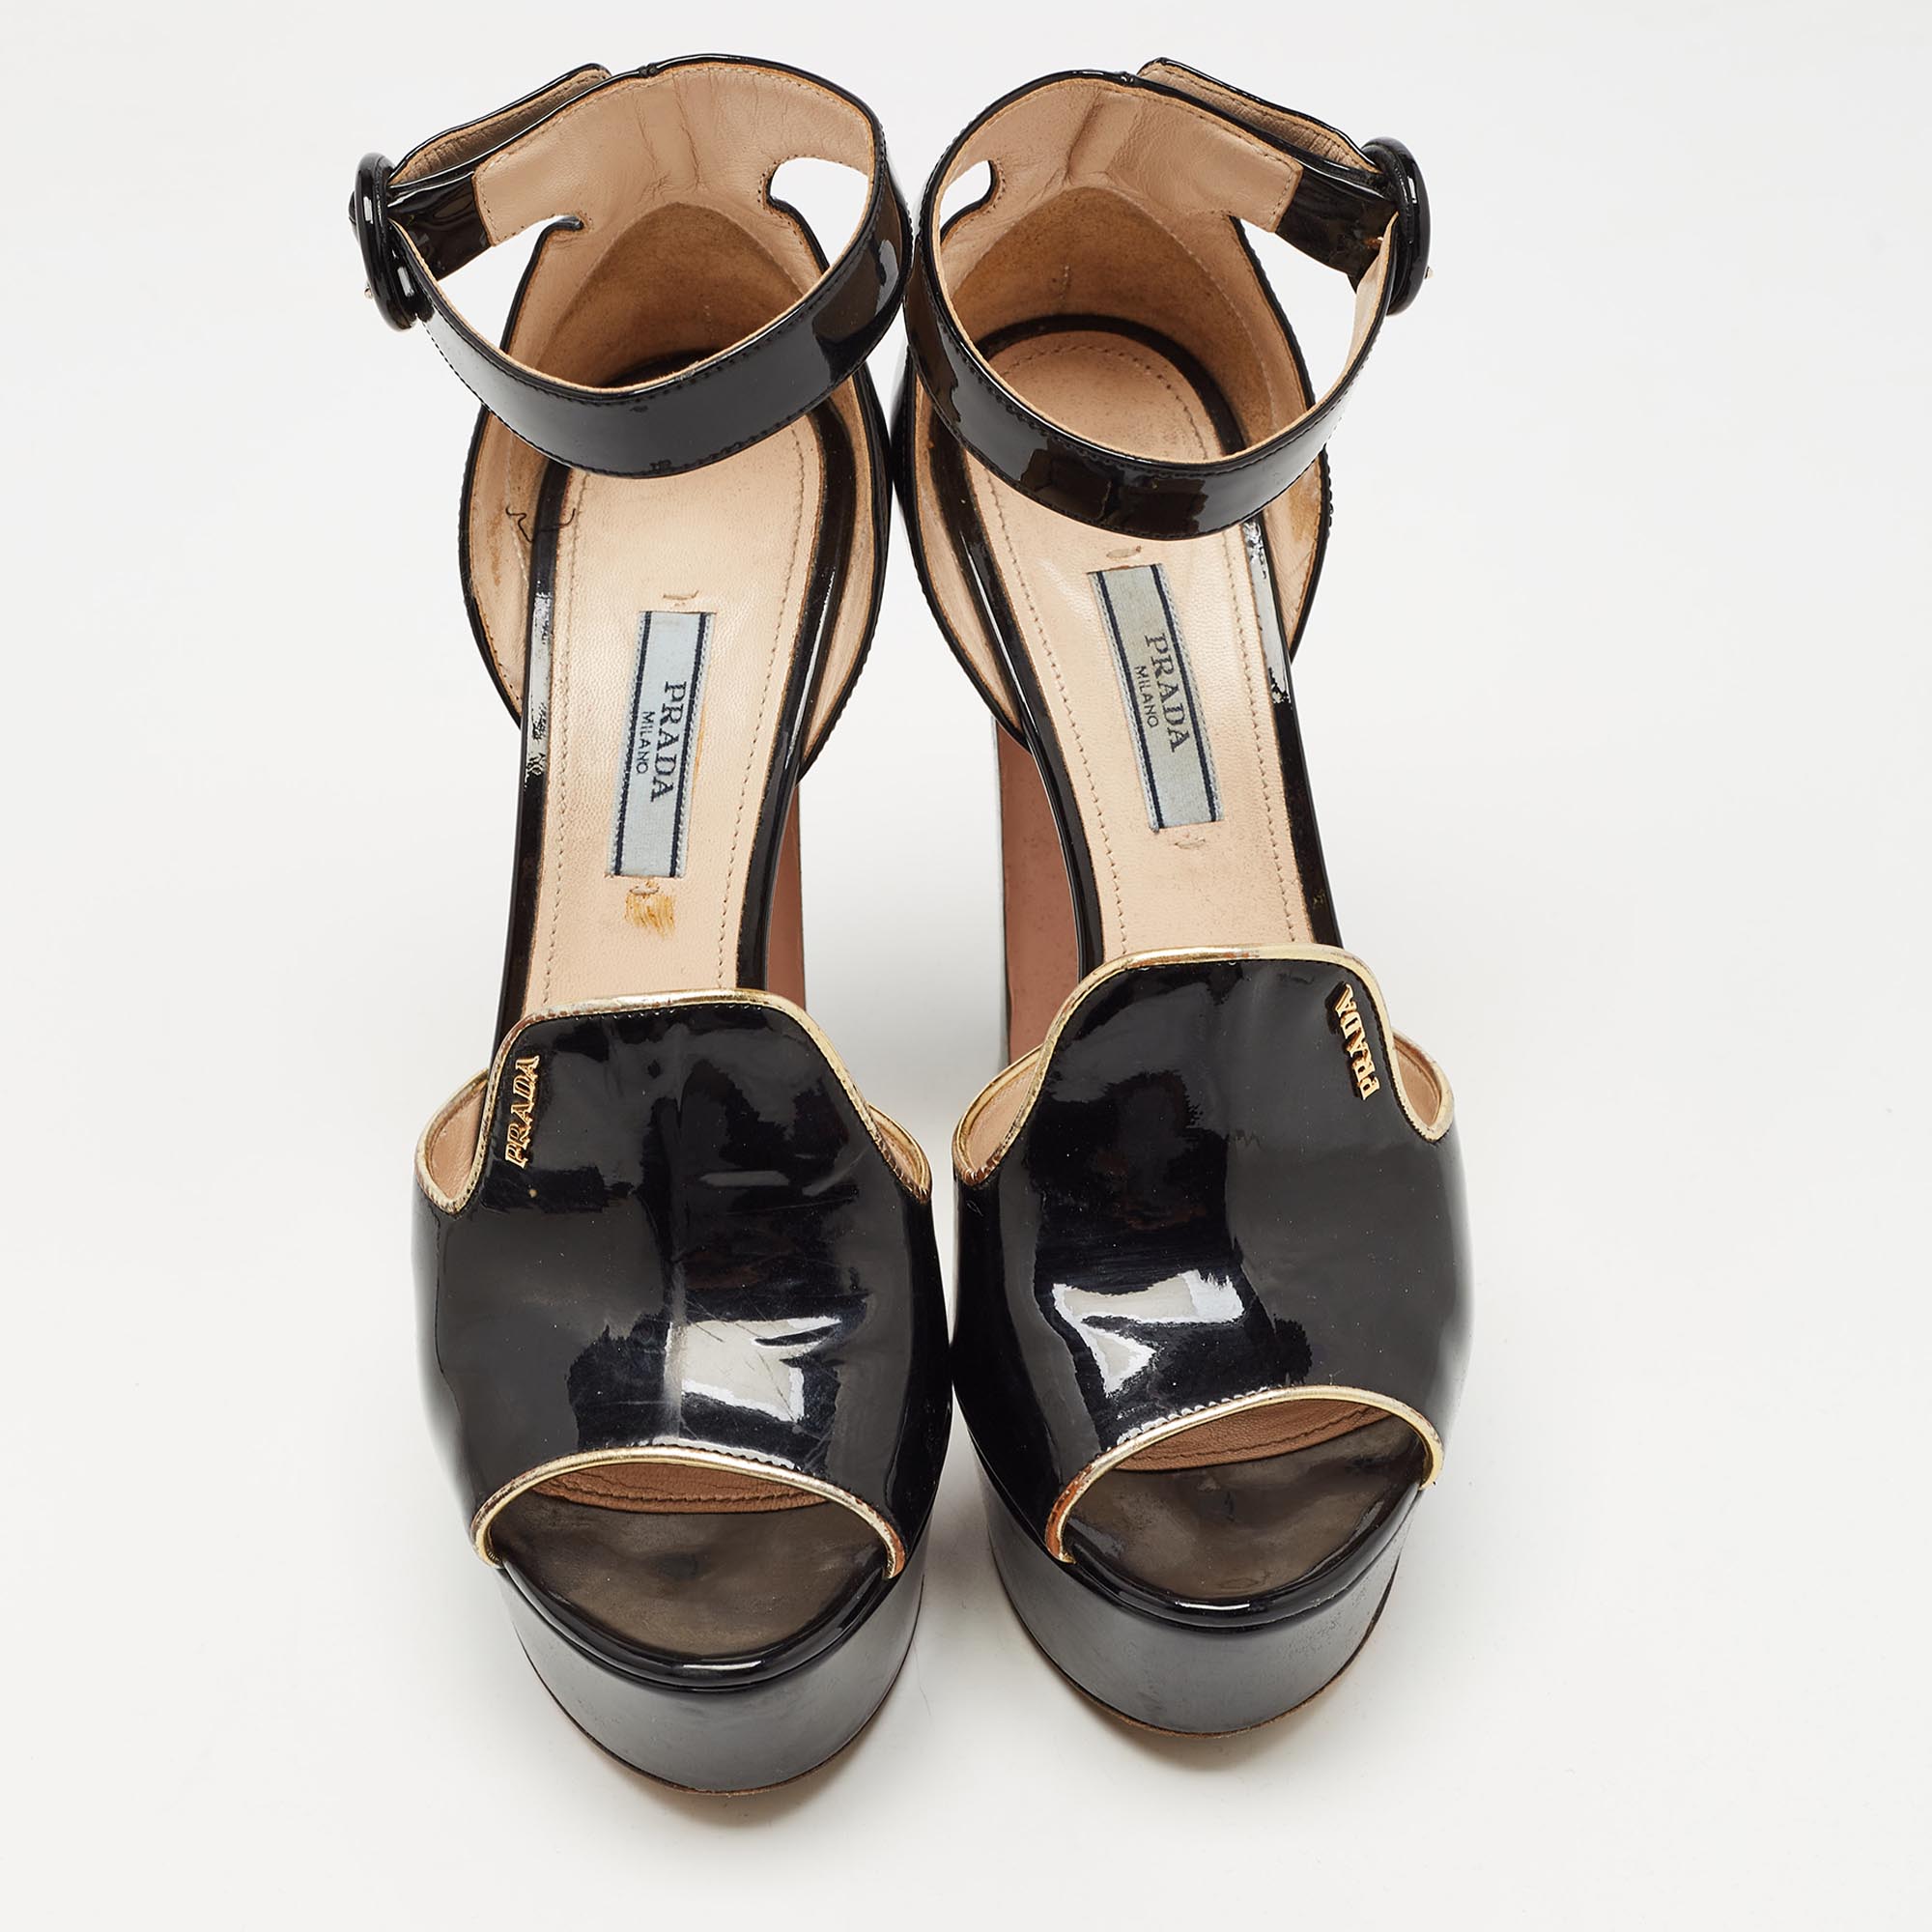 Prada Black Patent Leather Ankle Strap Platform Sandals Size 38